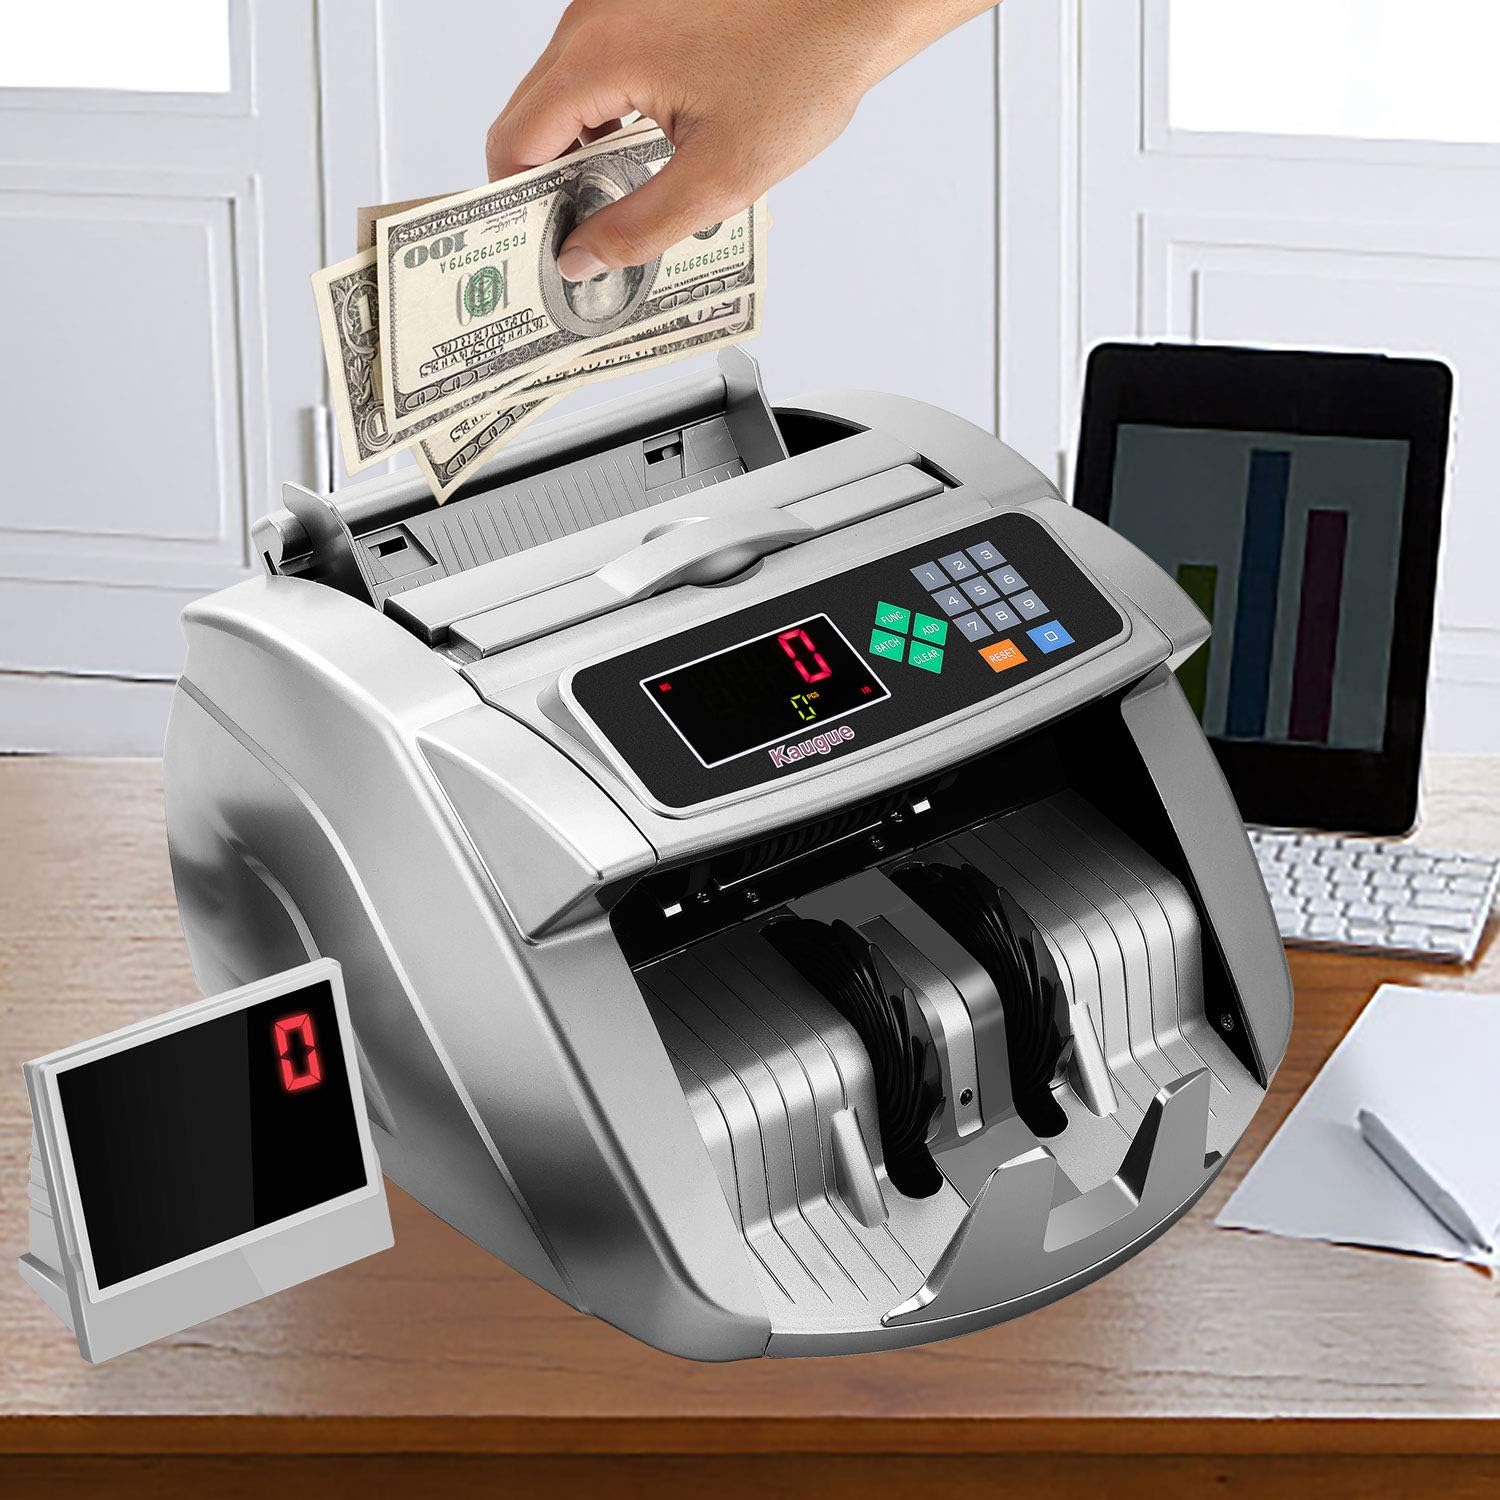 Standard Business Grade Bill Cash Counter Machine -Doesnt Count Value of Bills Kaegue Counterfeit Bill Money Detector Machine Money Counter Machine with UV/MG/IR/MT